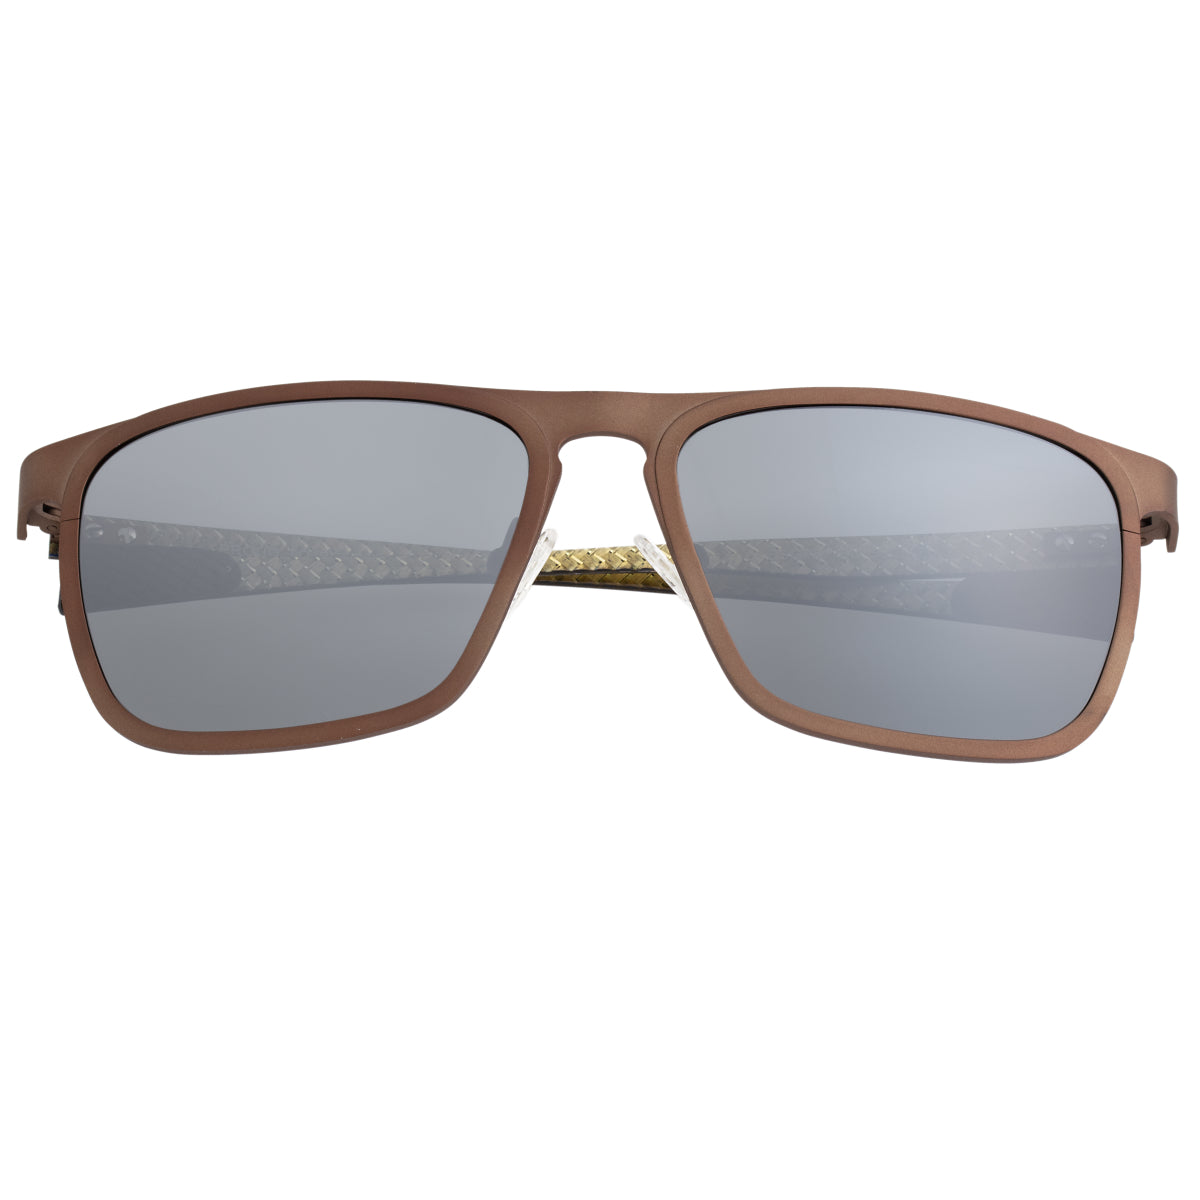 Breed Capricorn Titanium Polarized Sunglasses - Brown/Black - BSG031BN